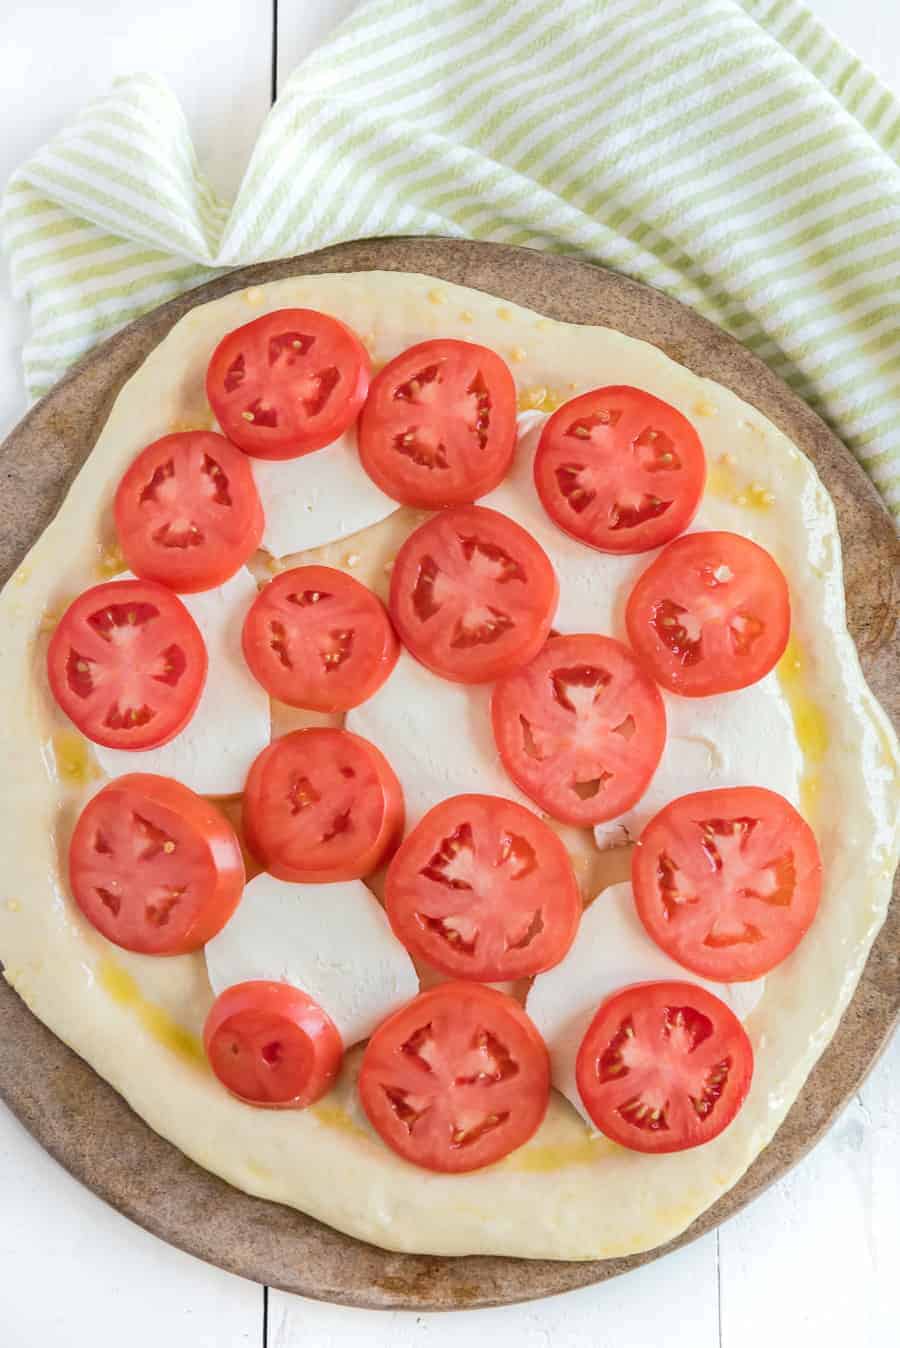 tomatoes and mozzarella on raw margarita pizza.